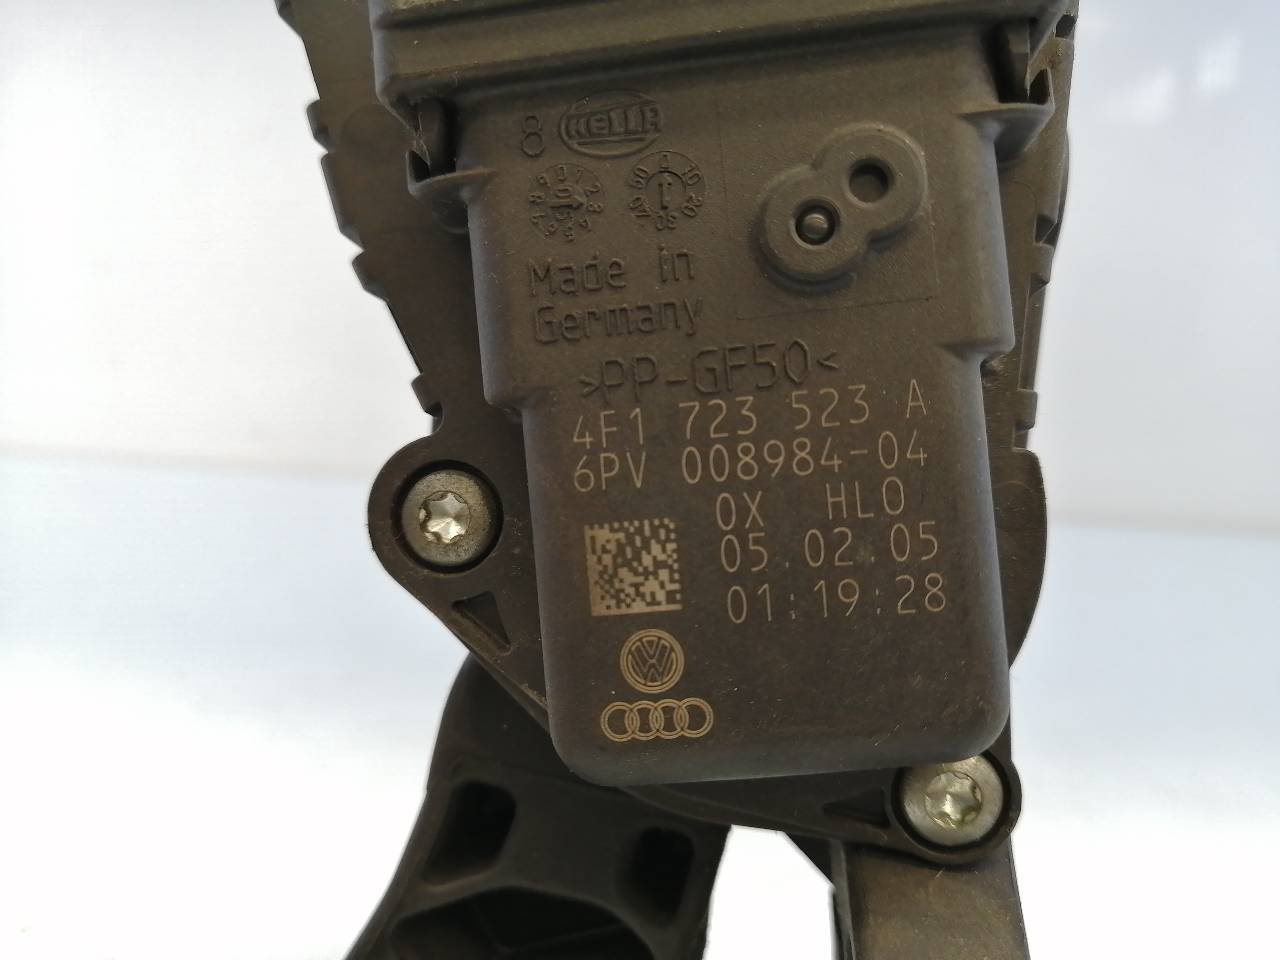 AUDI A6 C6/4F (2004-2011) Педаль газа 4F1723523A, 6PV00898404 18723271